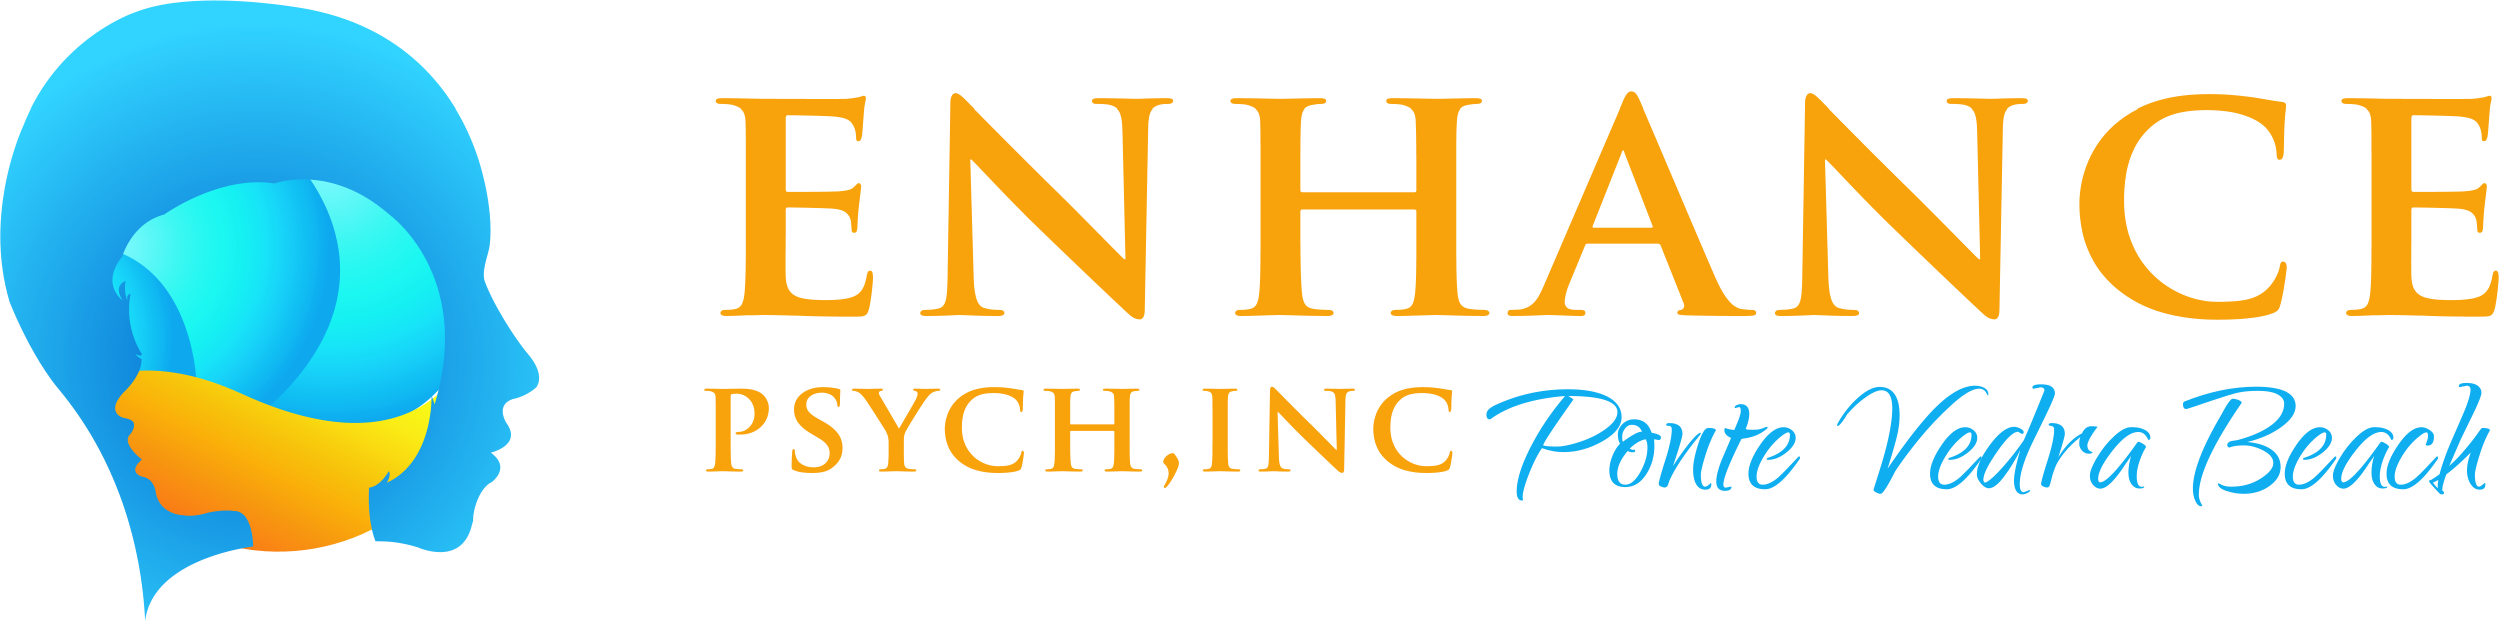 ehance-logo